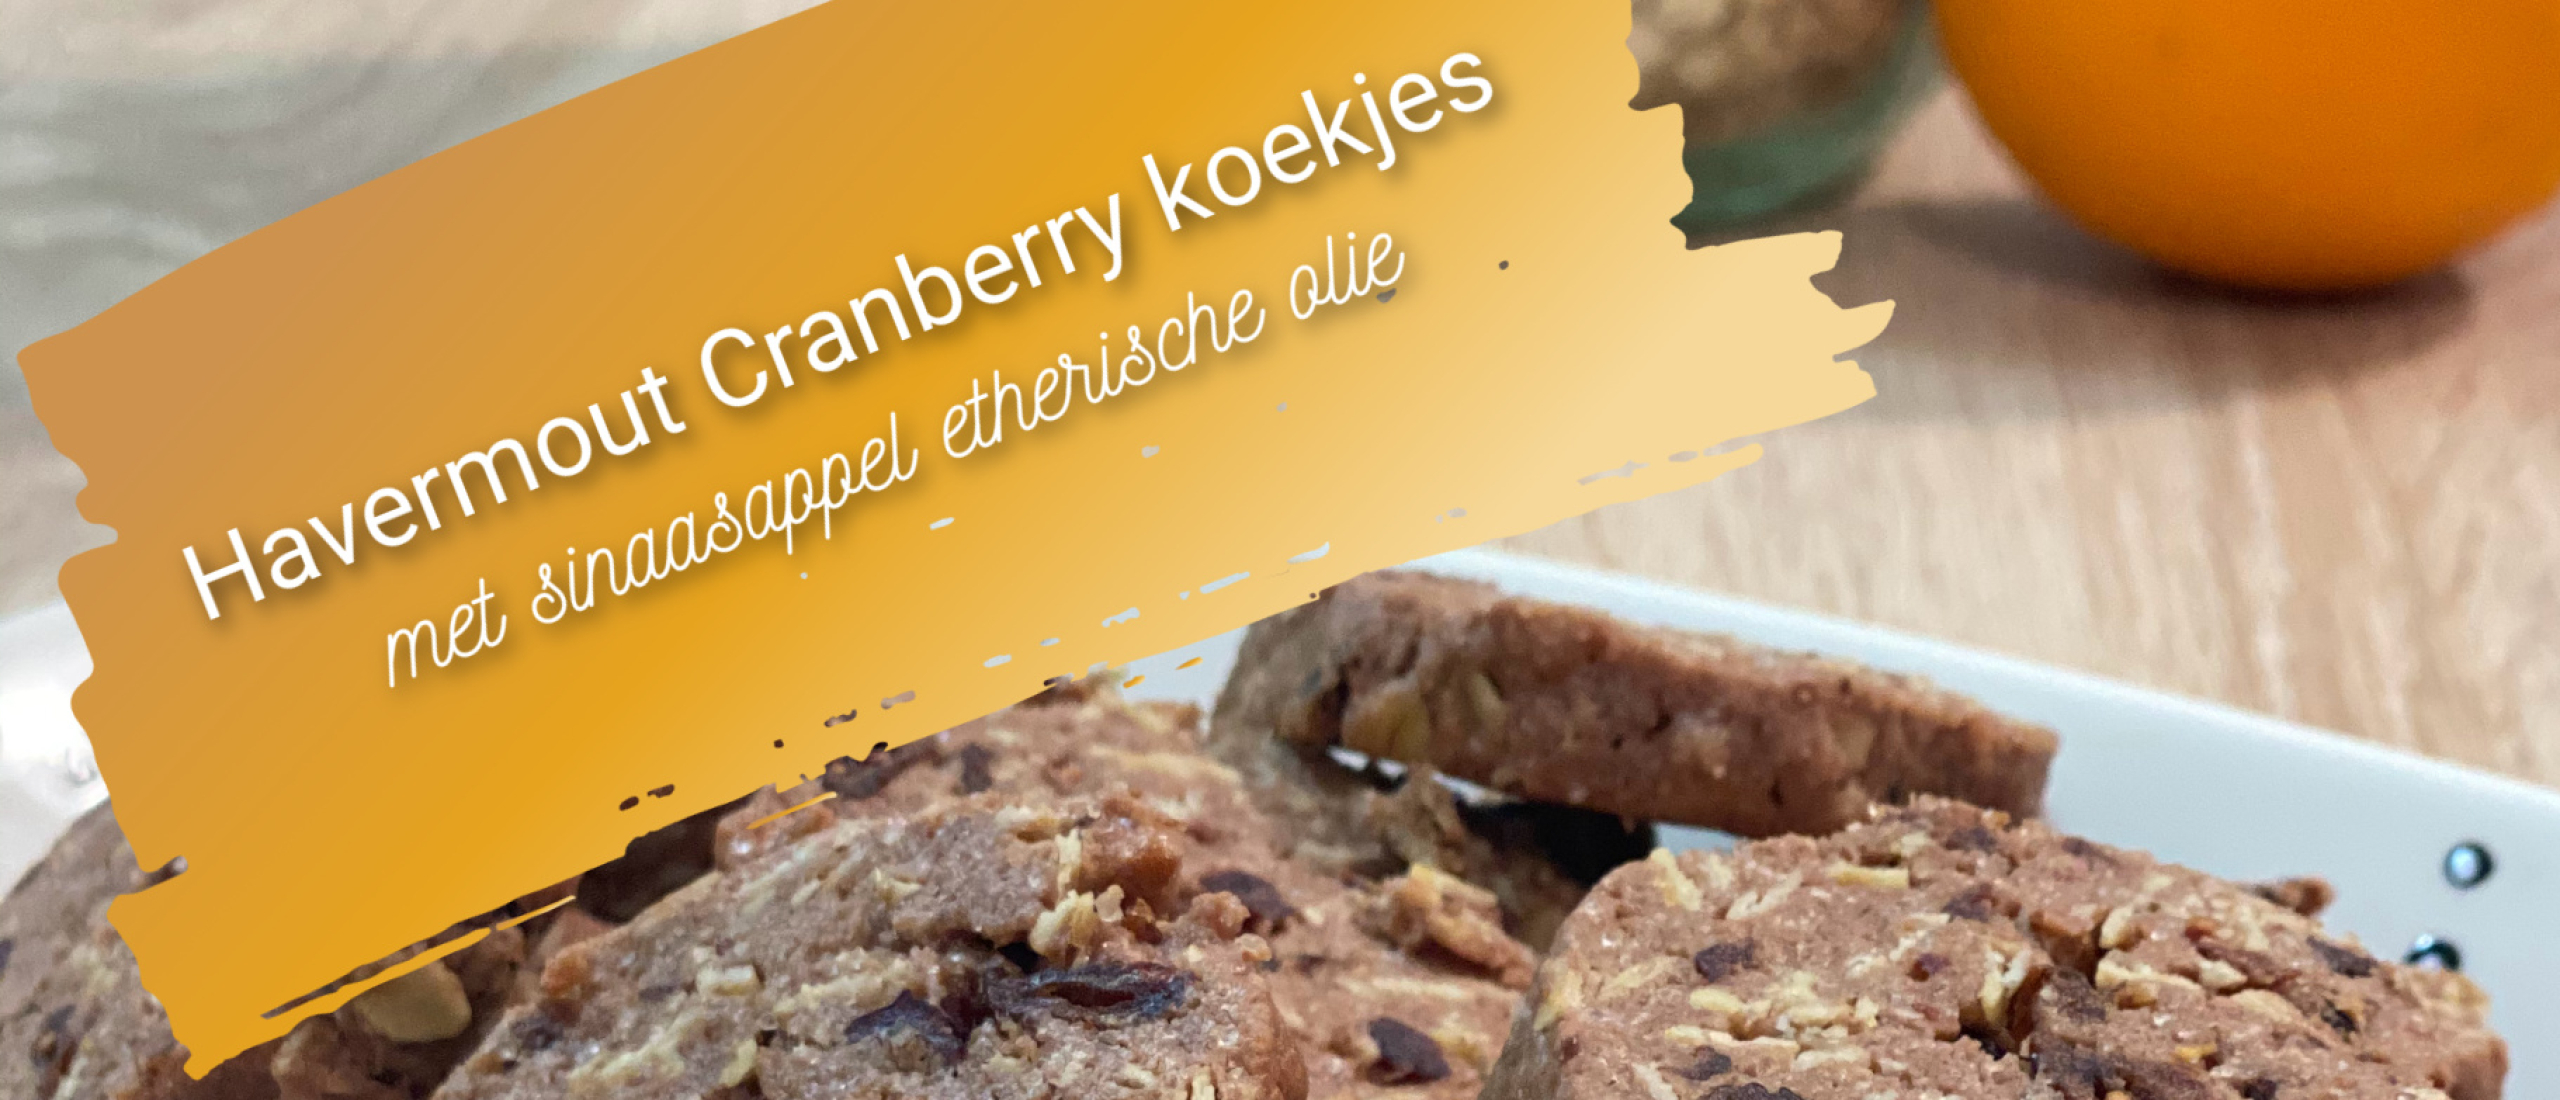 cranberry-havermout-koekjes